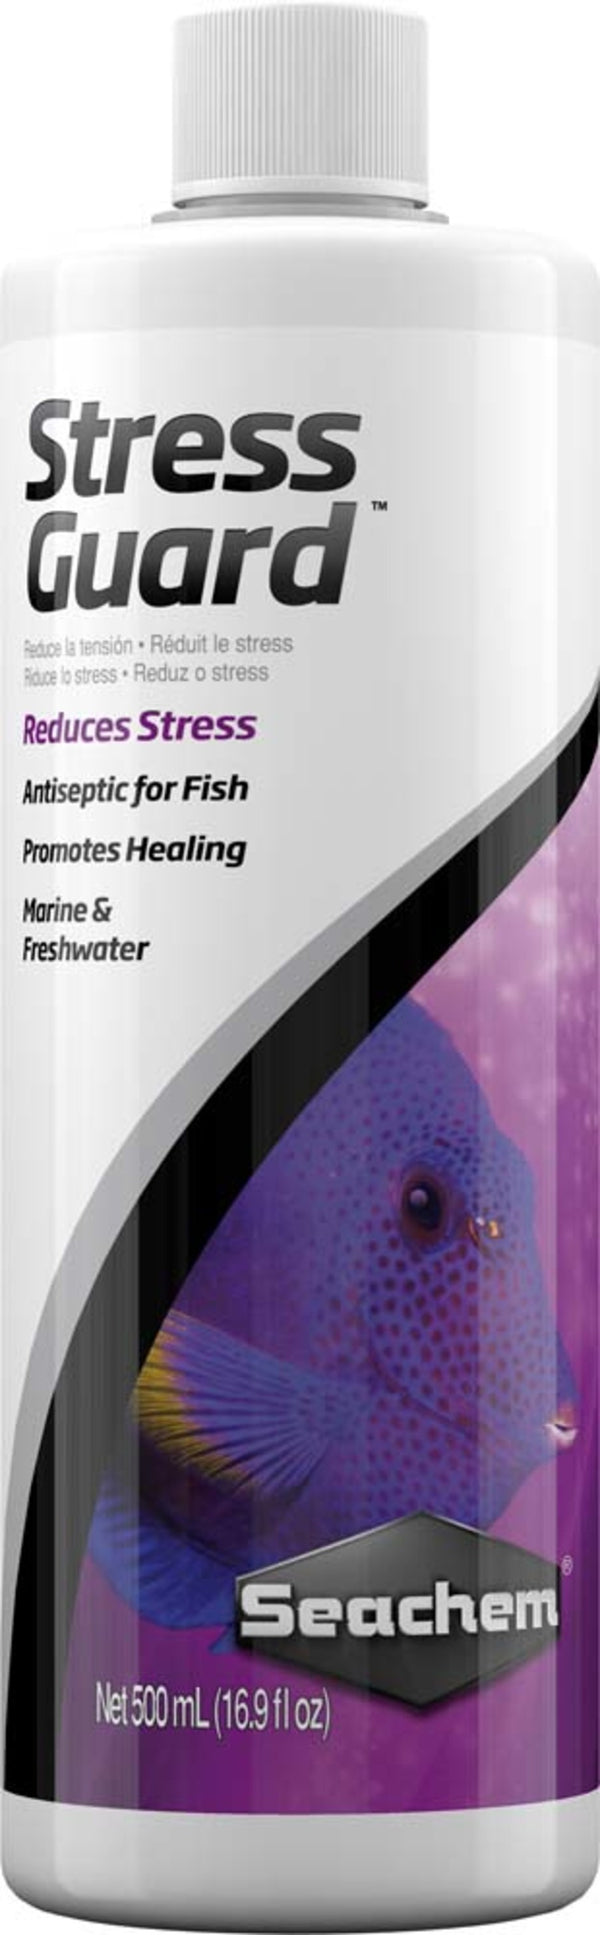 Seachem - StressGuard Medication Supplement